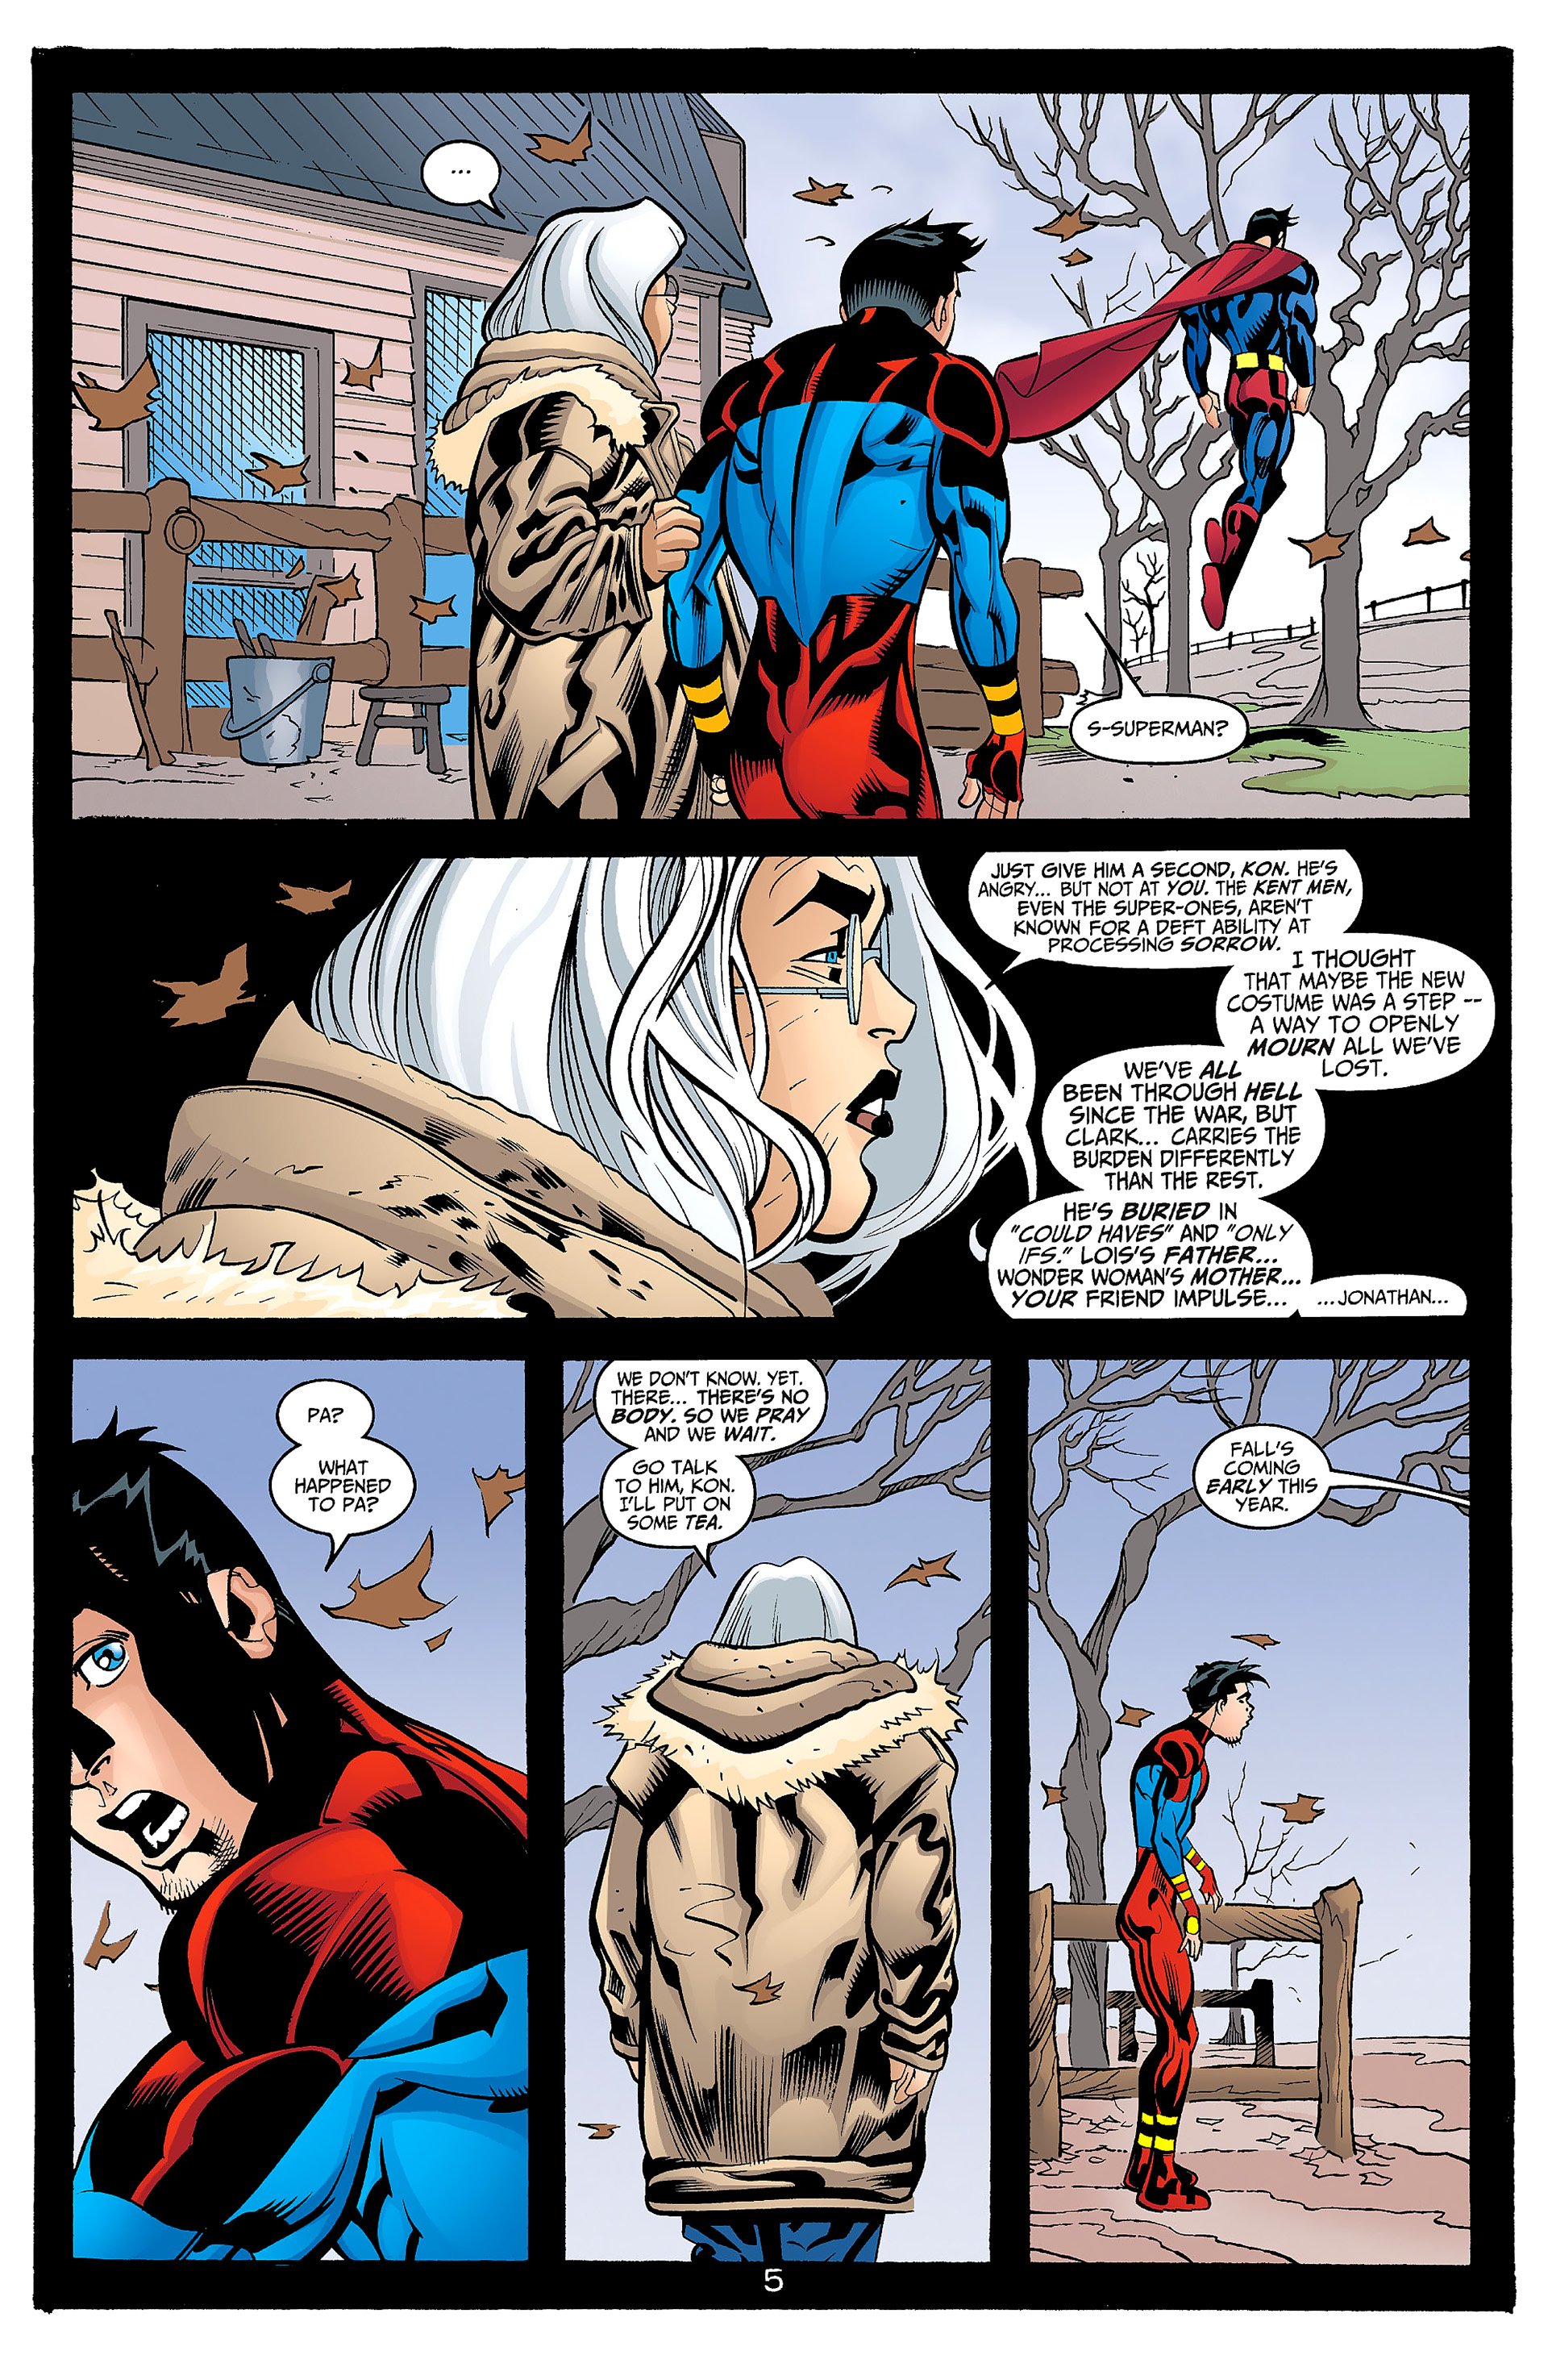 Superboy (1994) 92 Page 5